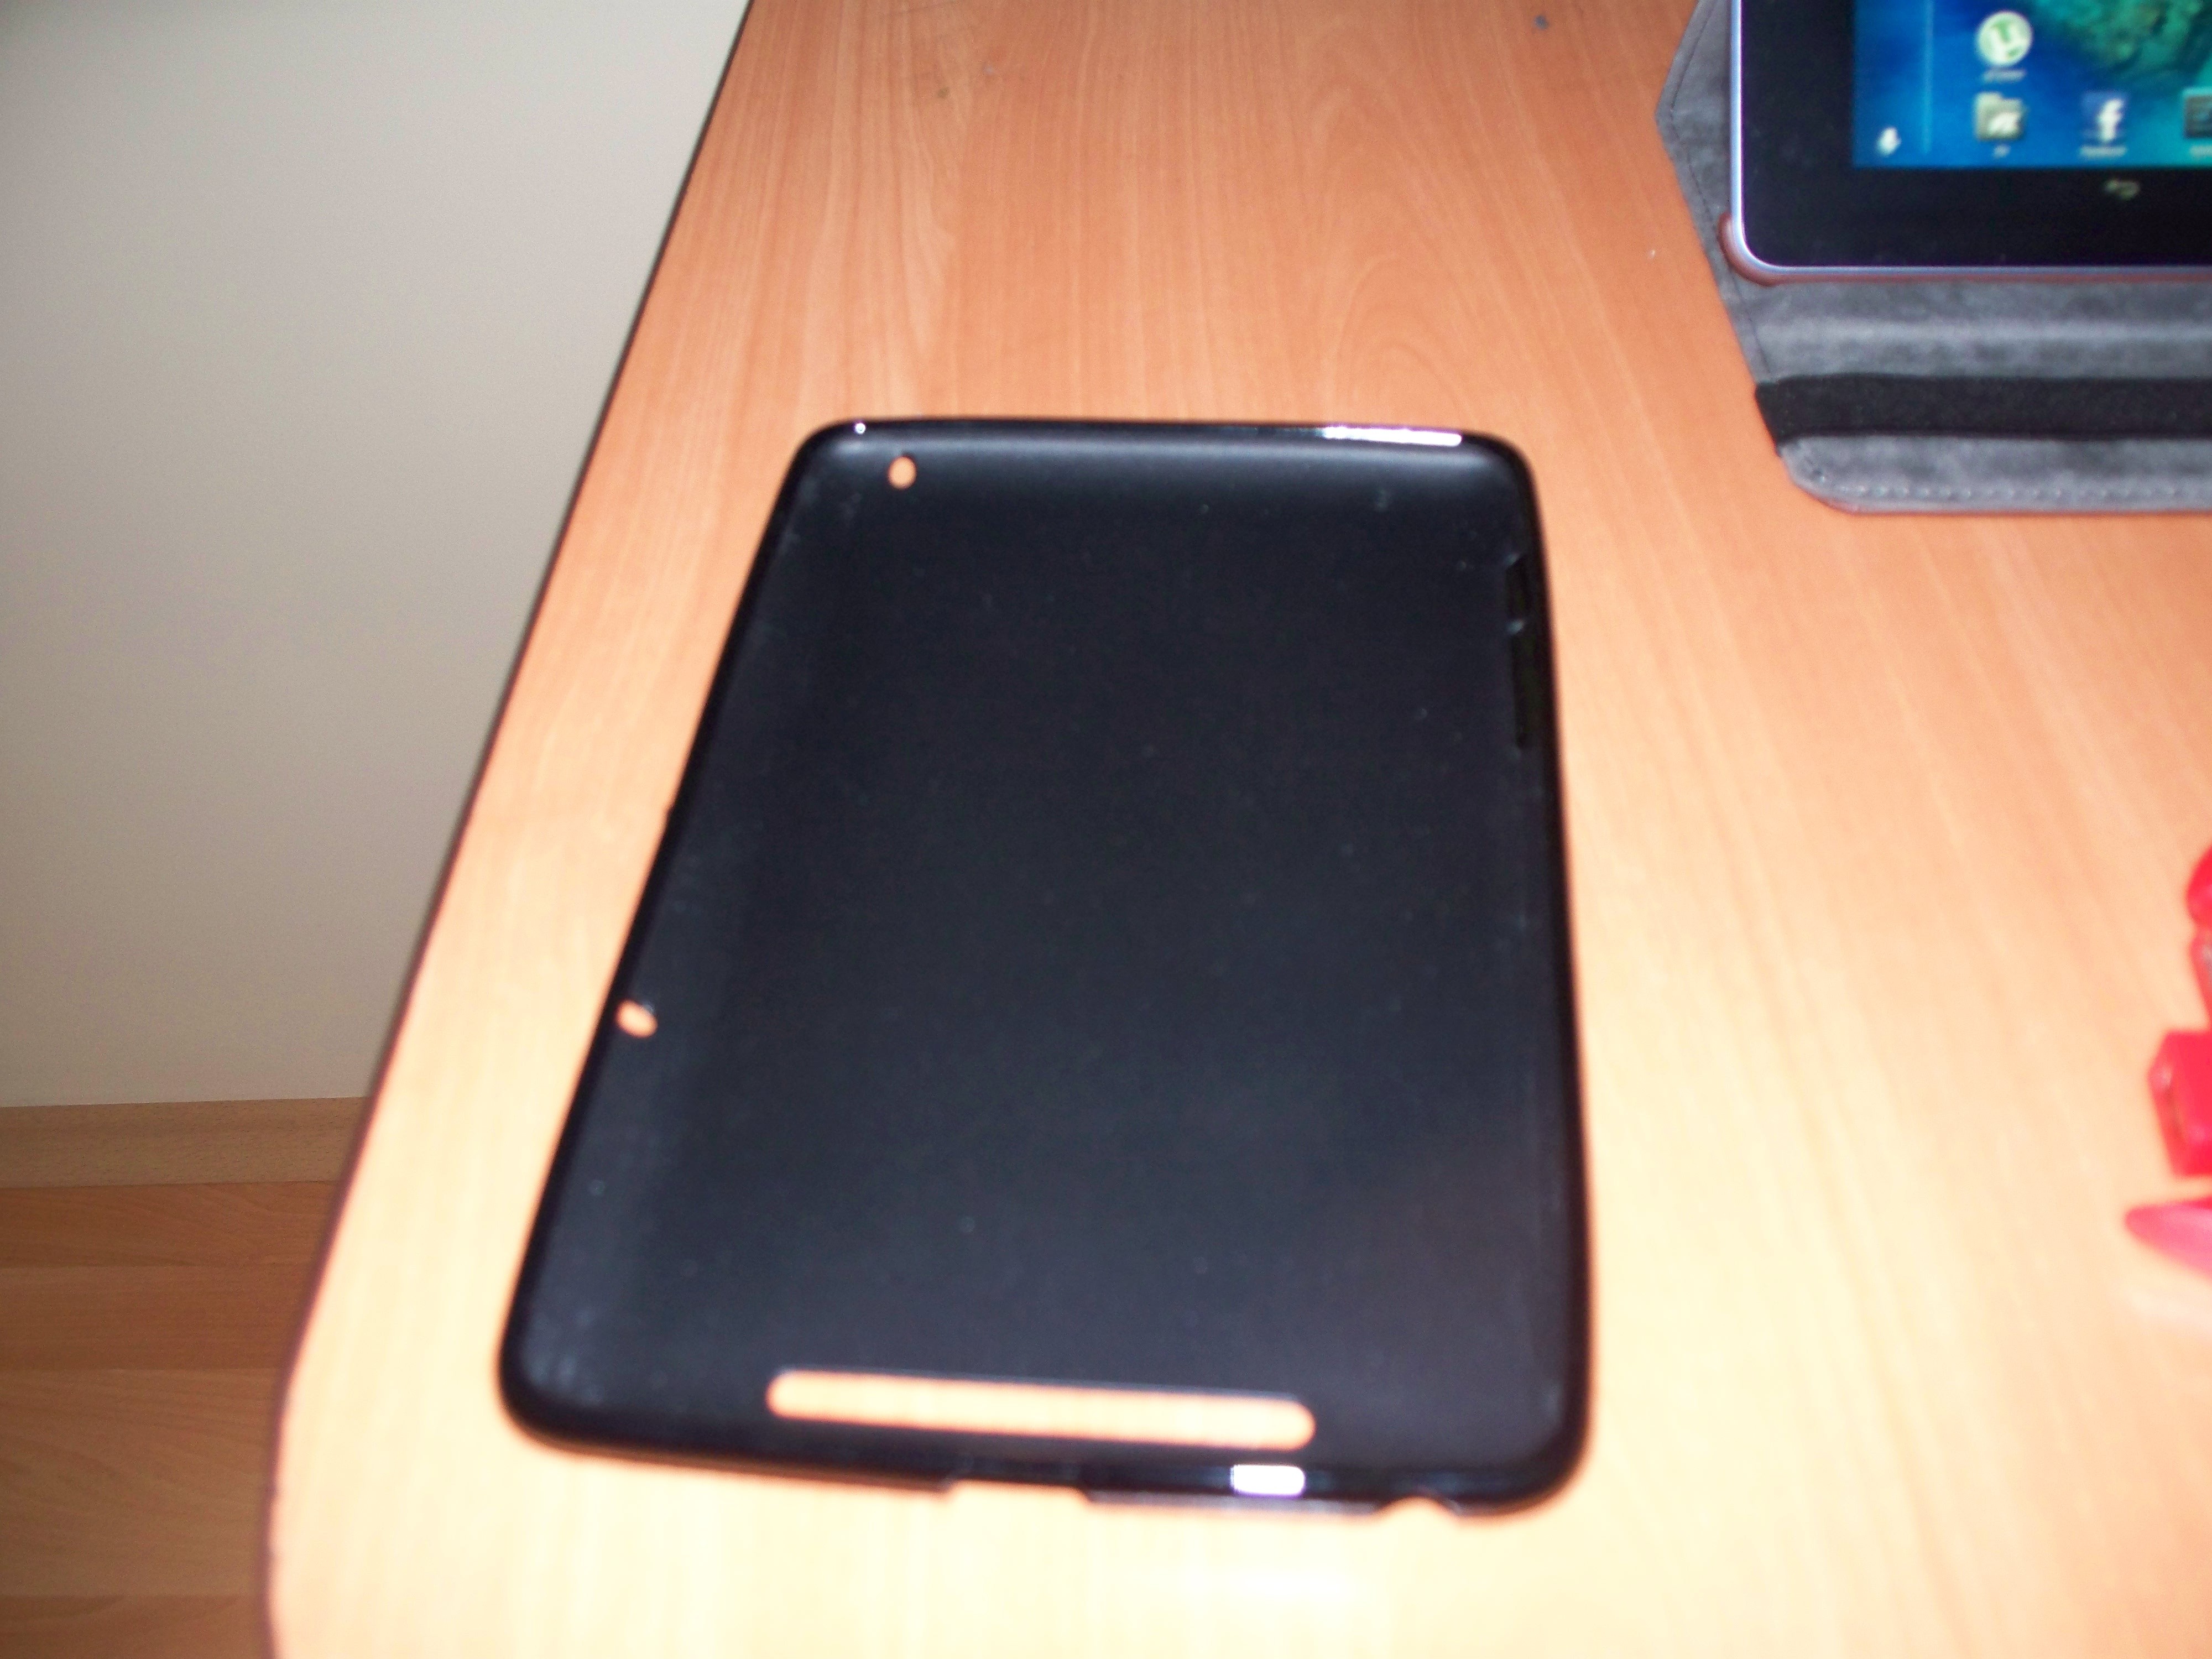  Nexus 7 aksesuar inceleme